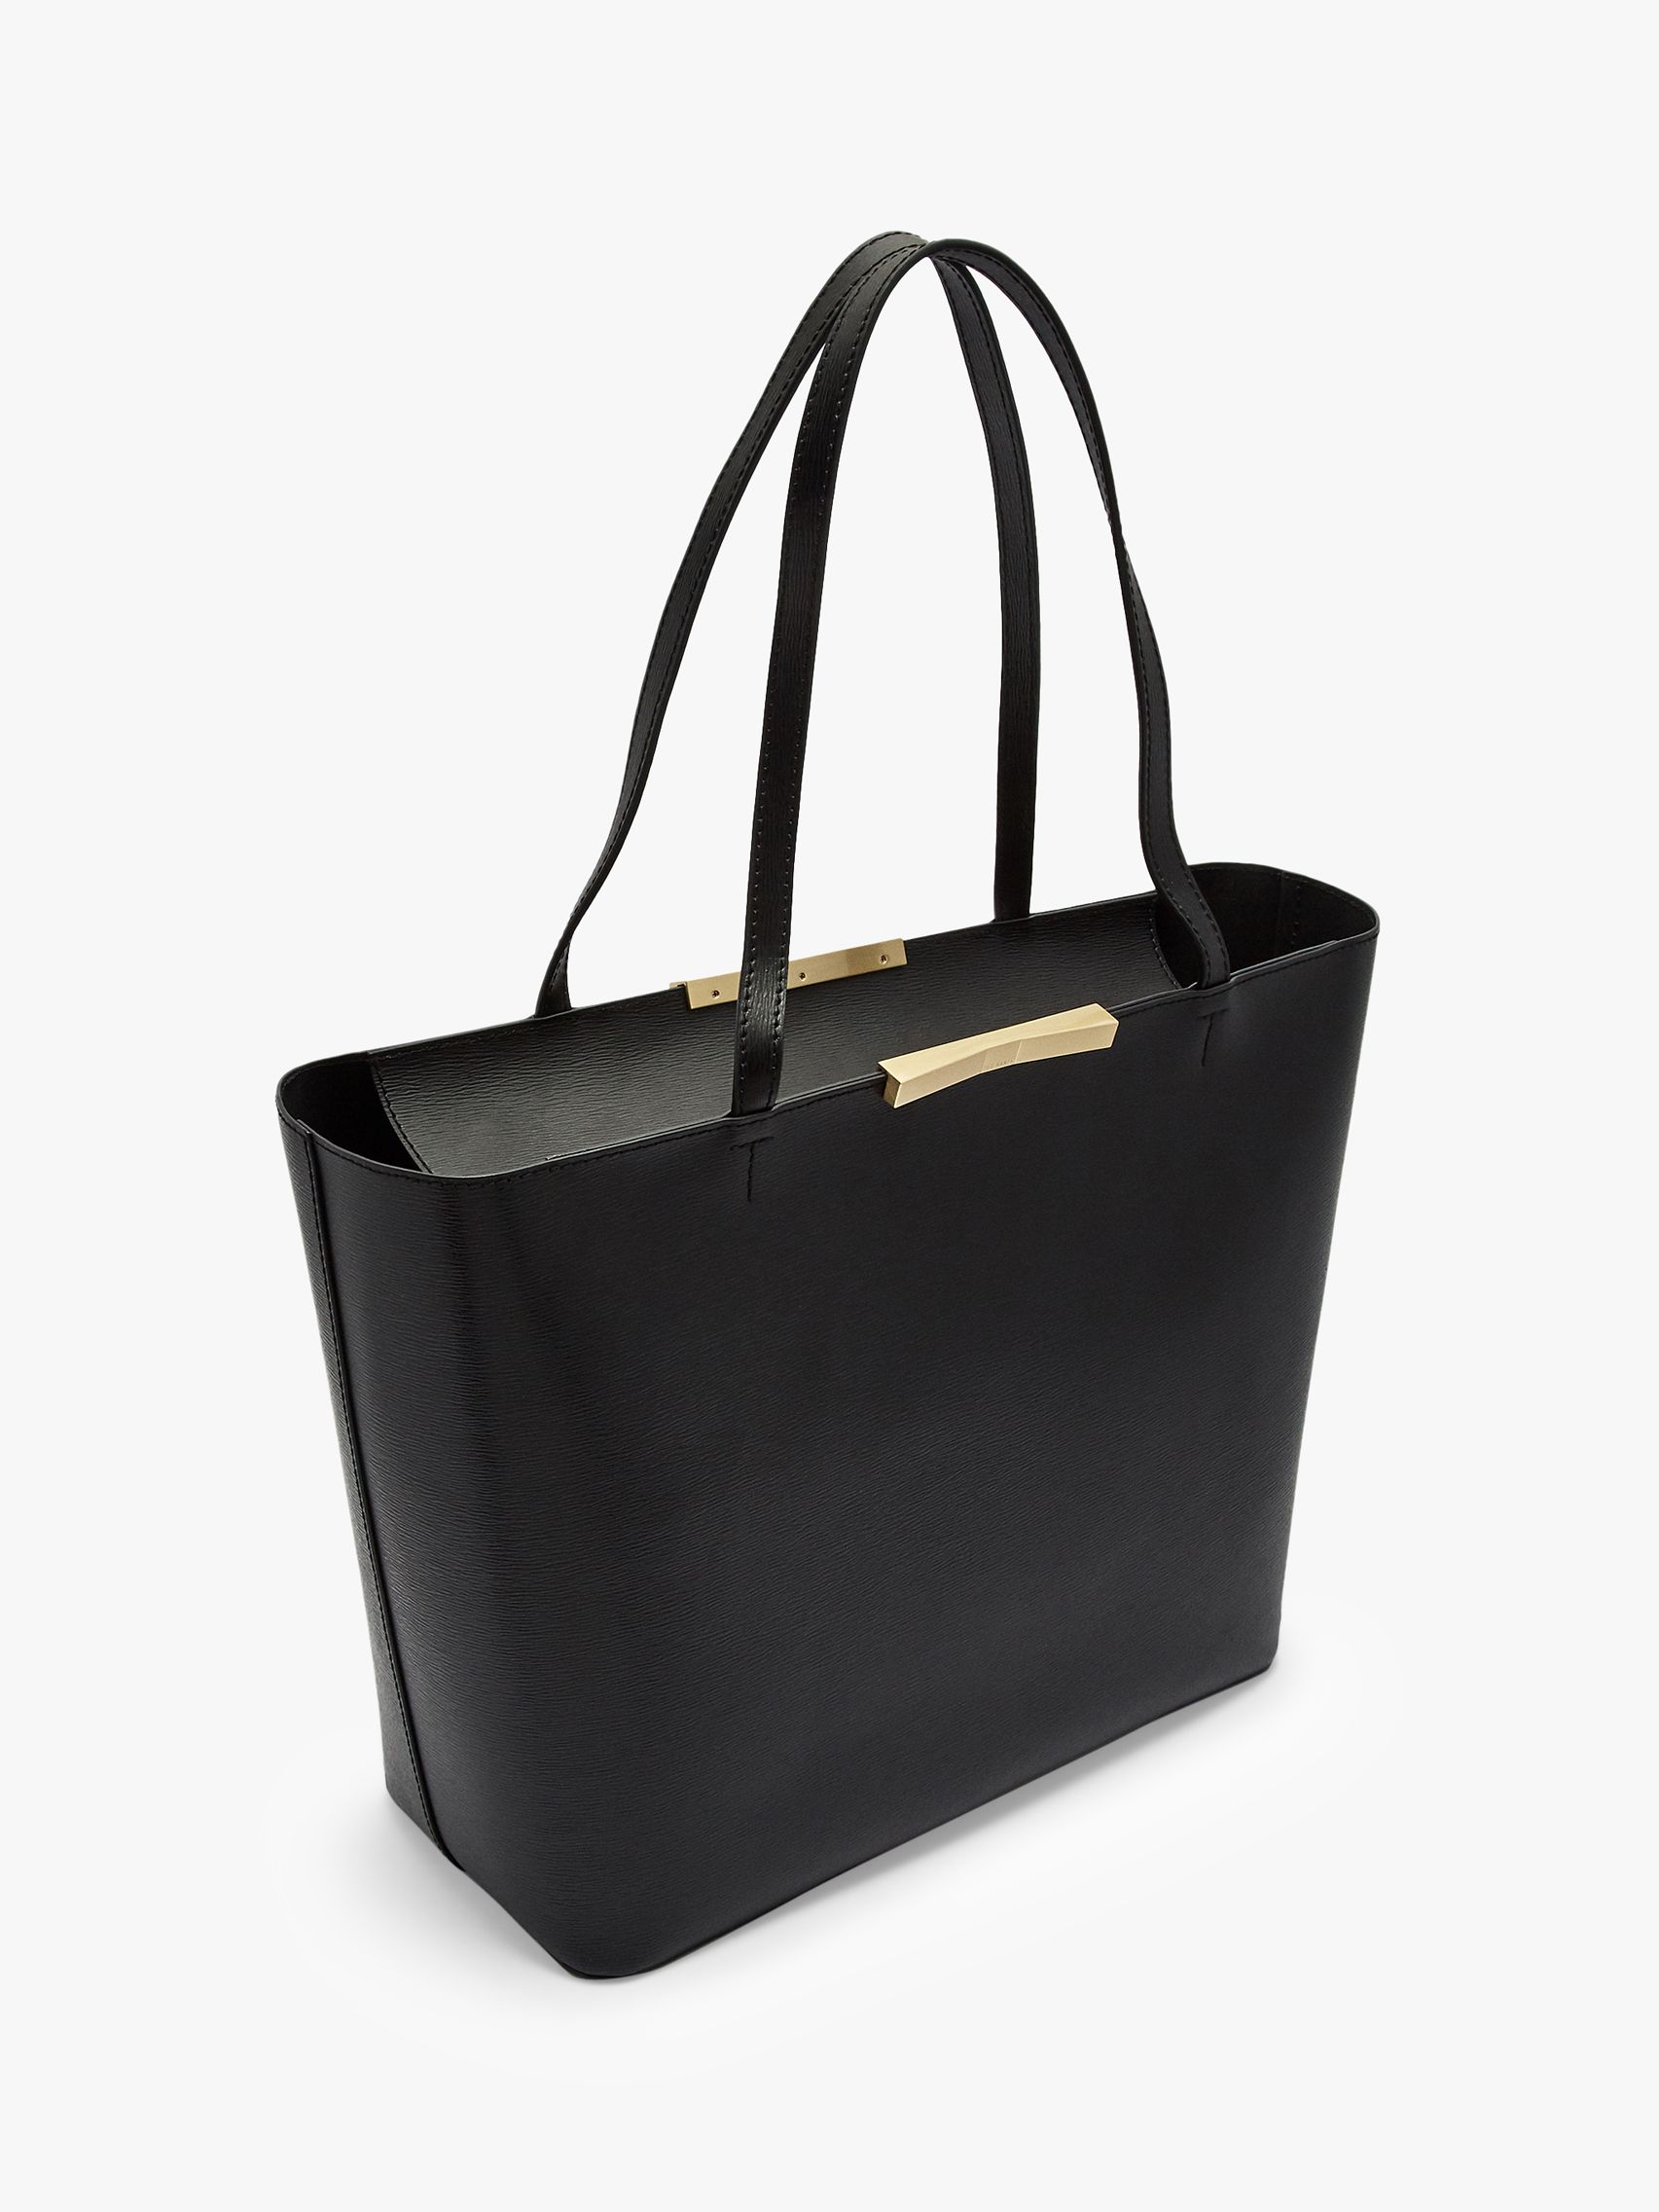 black shopper handbag